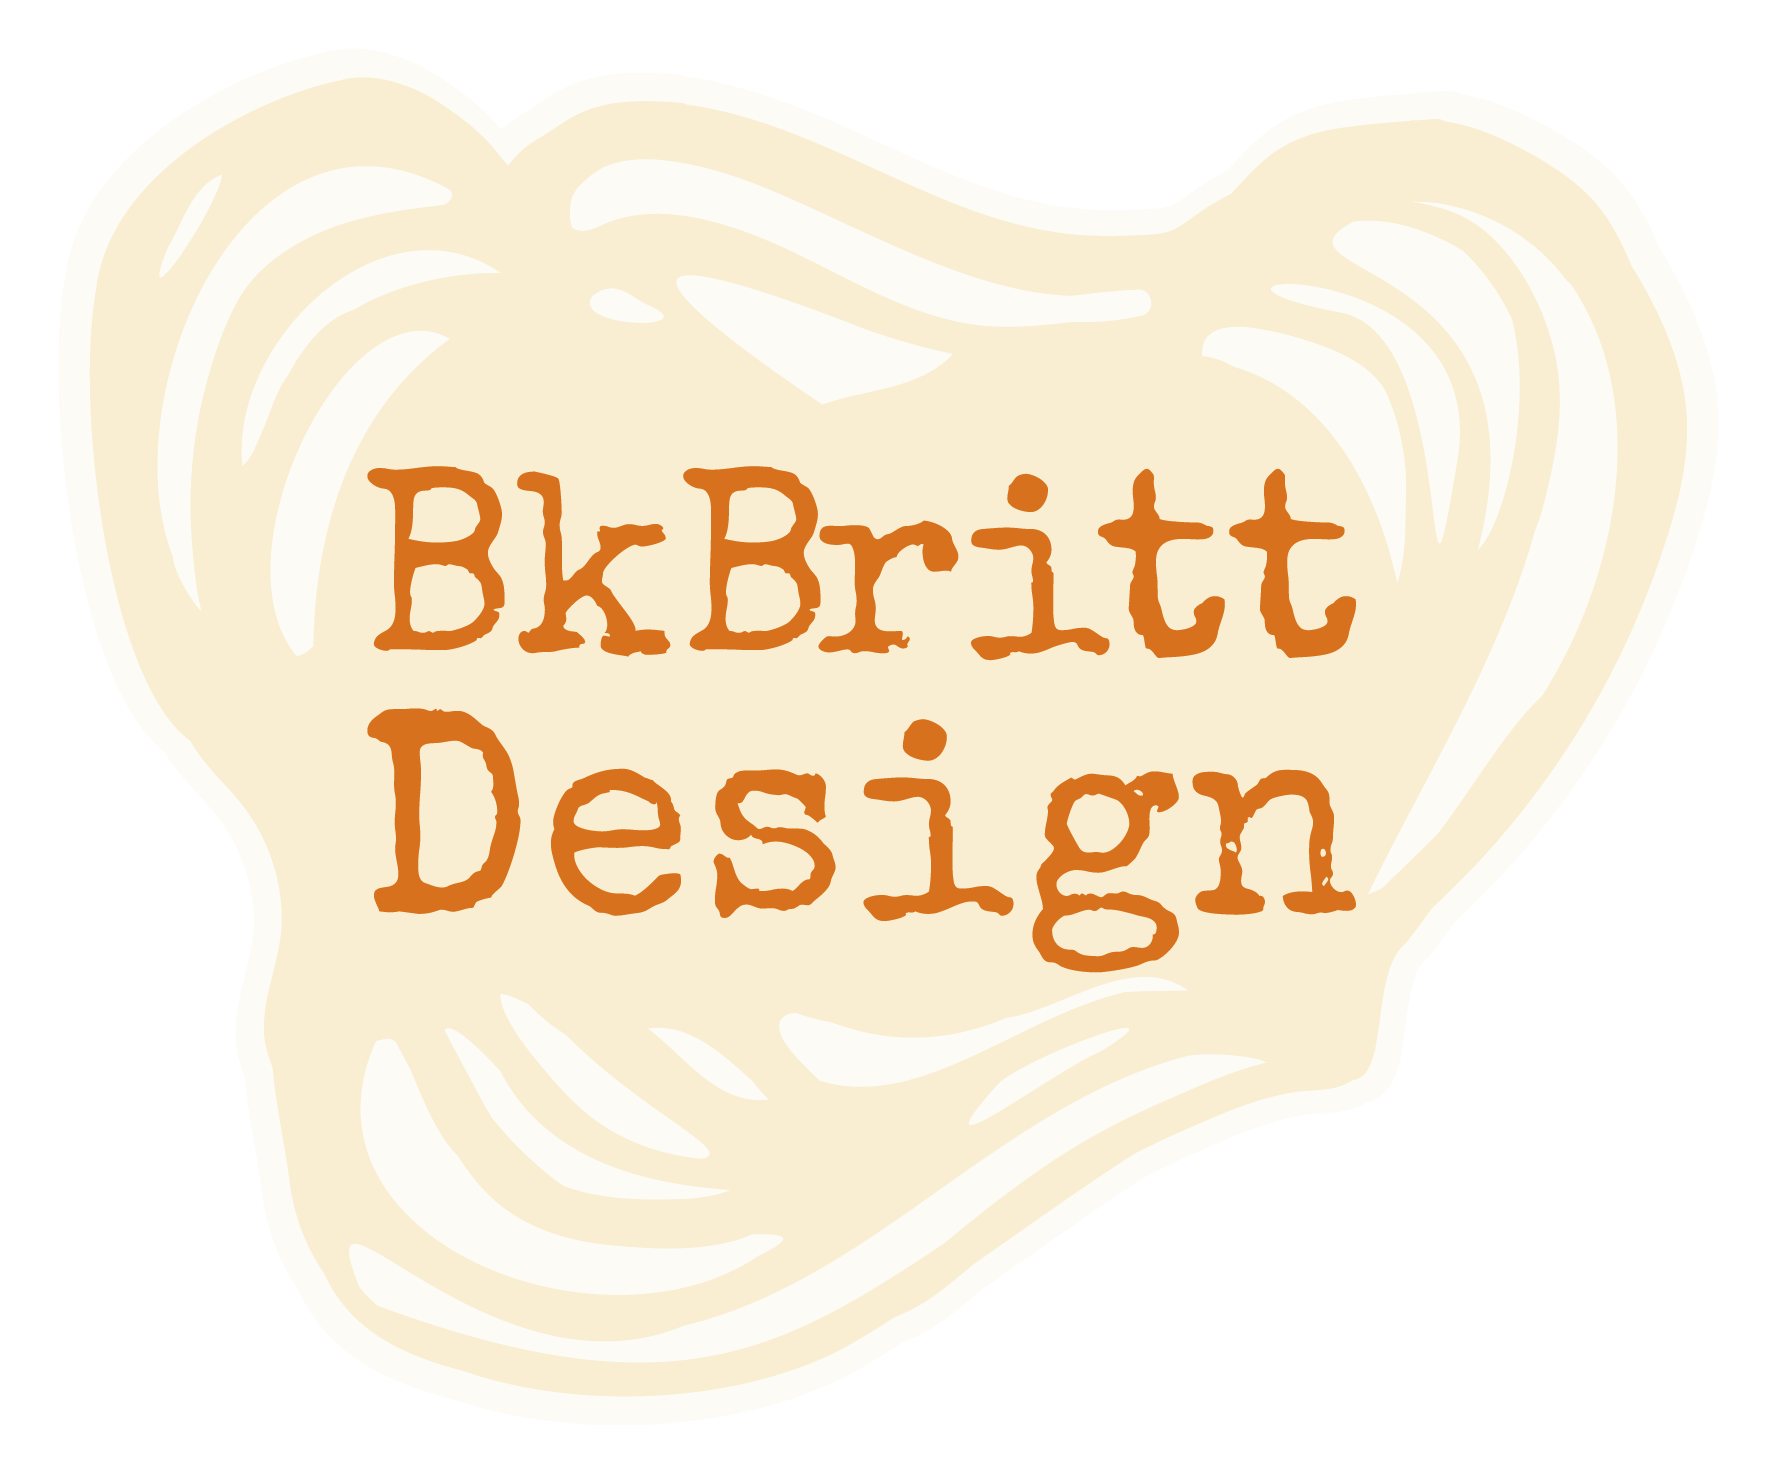 Designs by BkBritt